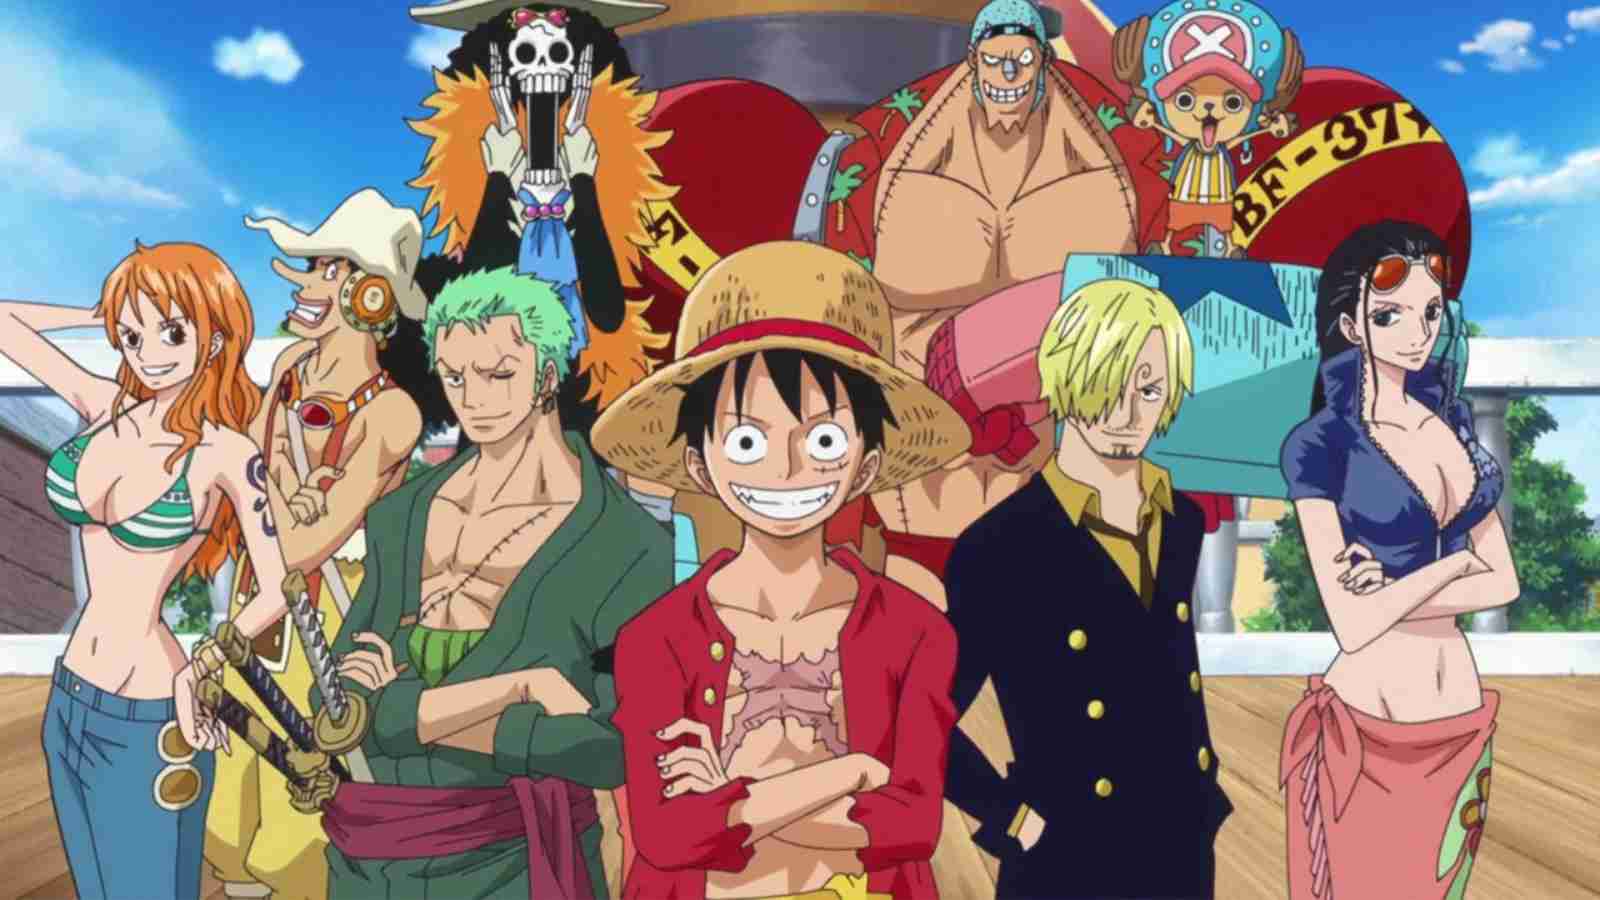 Final Saga of One Piece